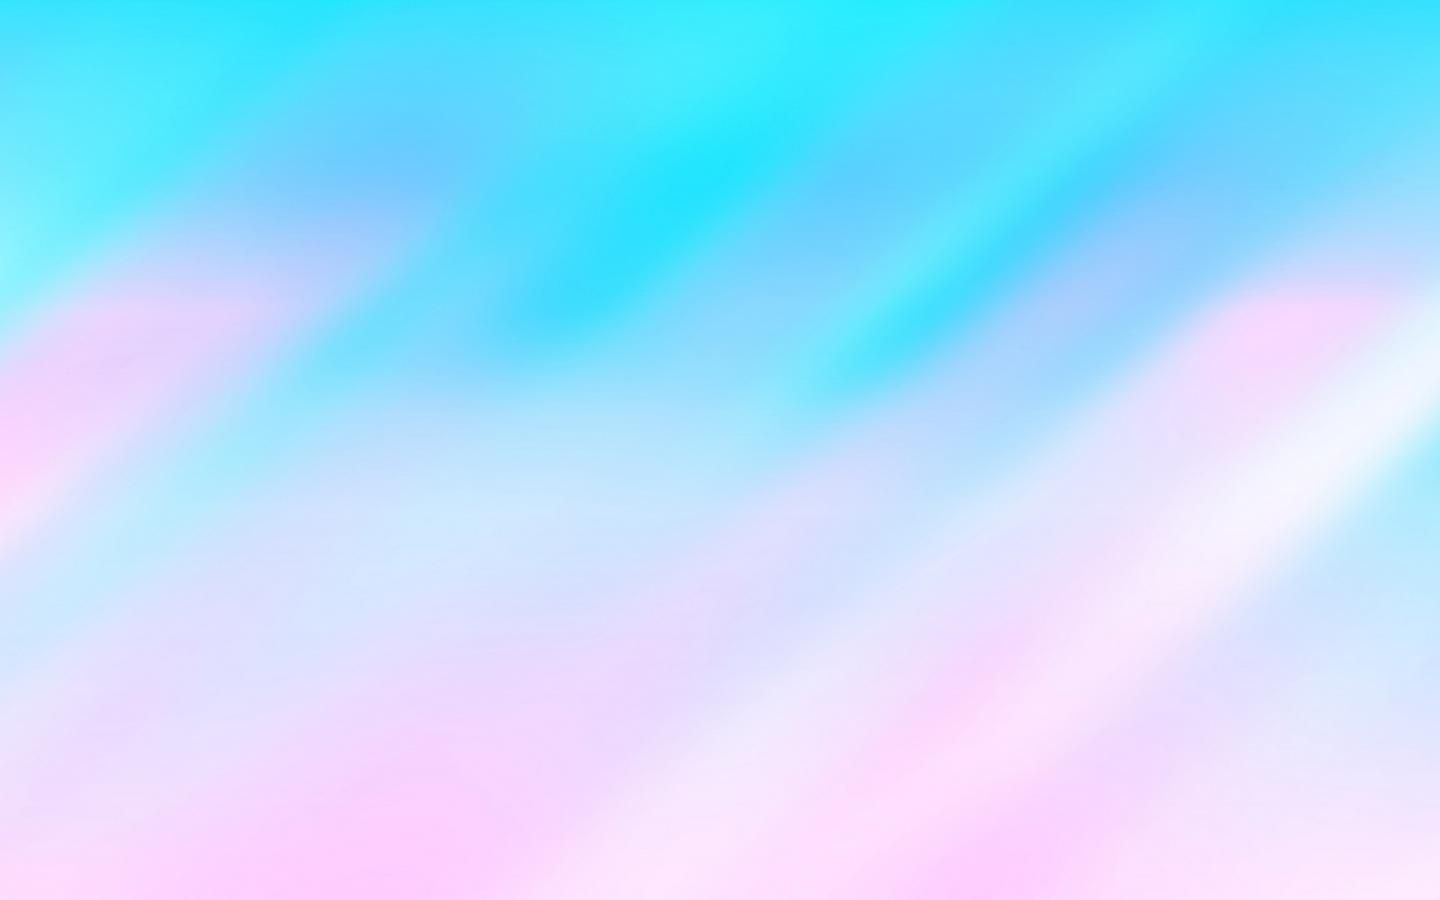 Pastel Light Blue Background. Pink wallpaper background, Blue background image, Wallpaper pink and blue